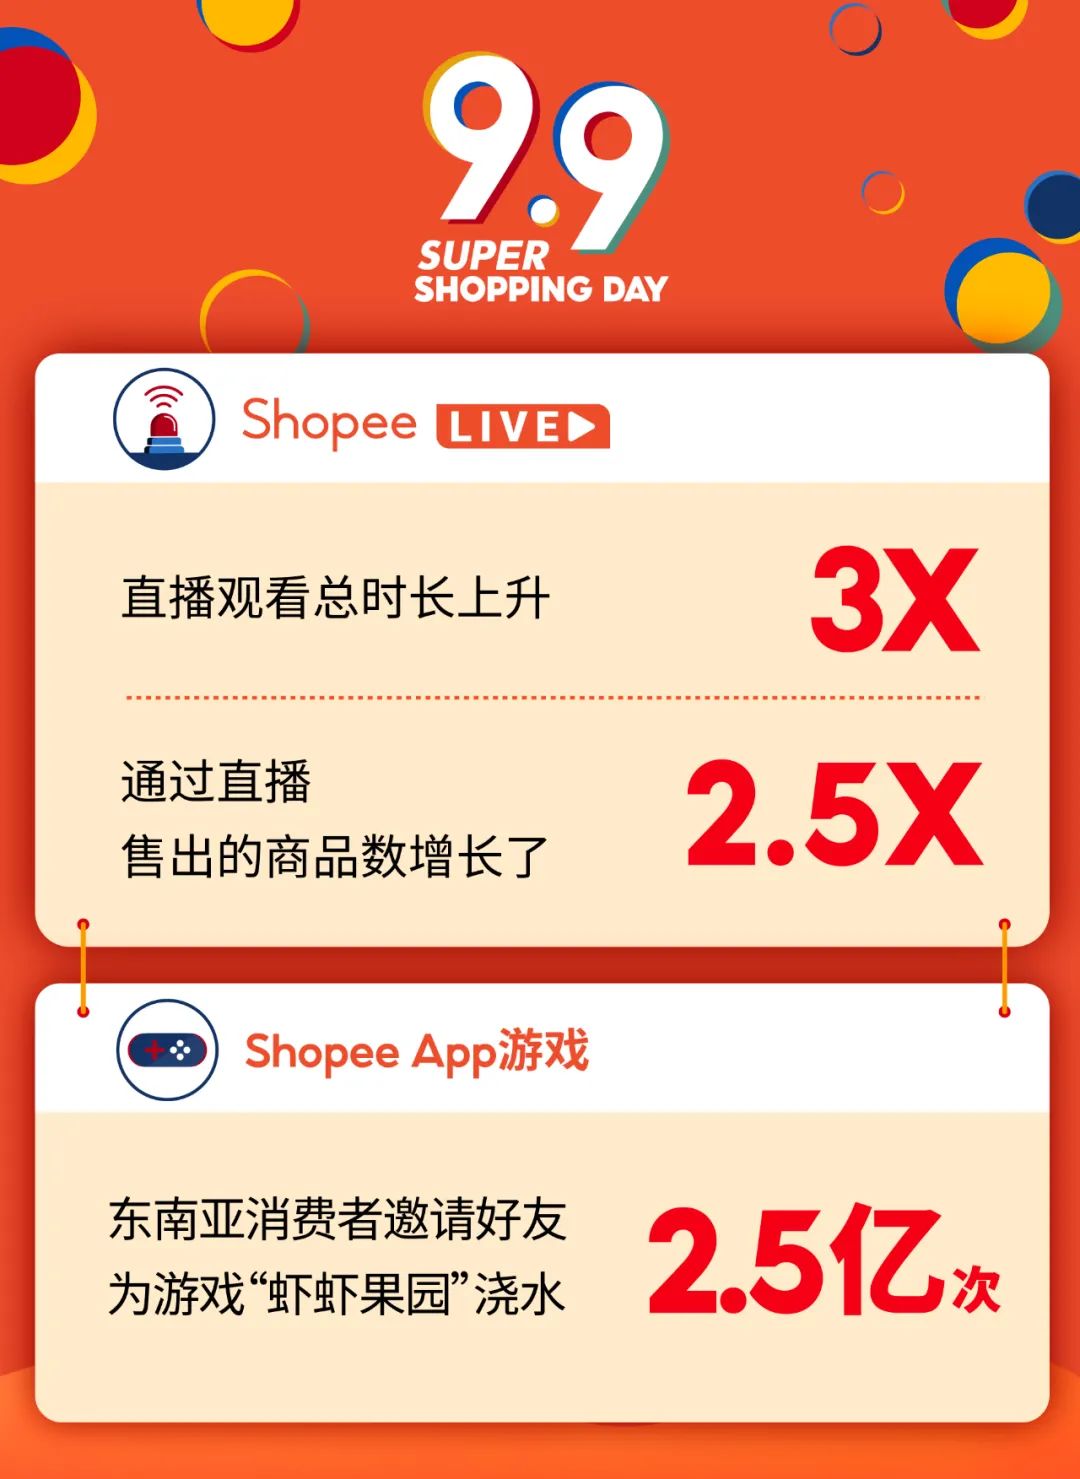 Shopee 9.9大促首小时狂售1200万件, 国货卖爆, 加派22架次包机才够运!